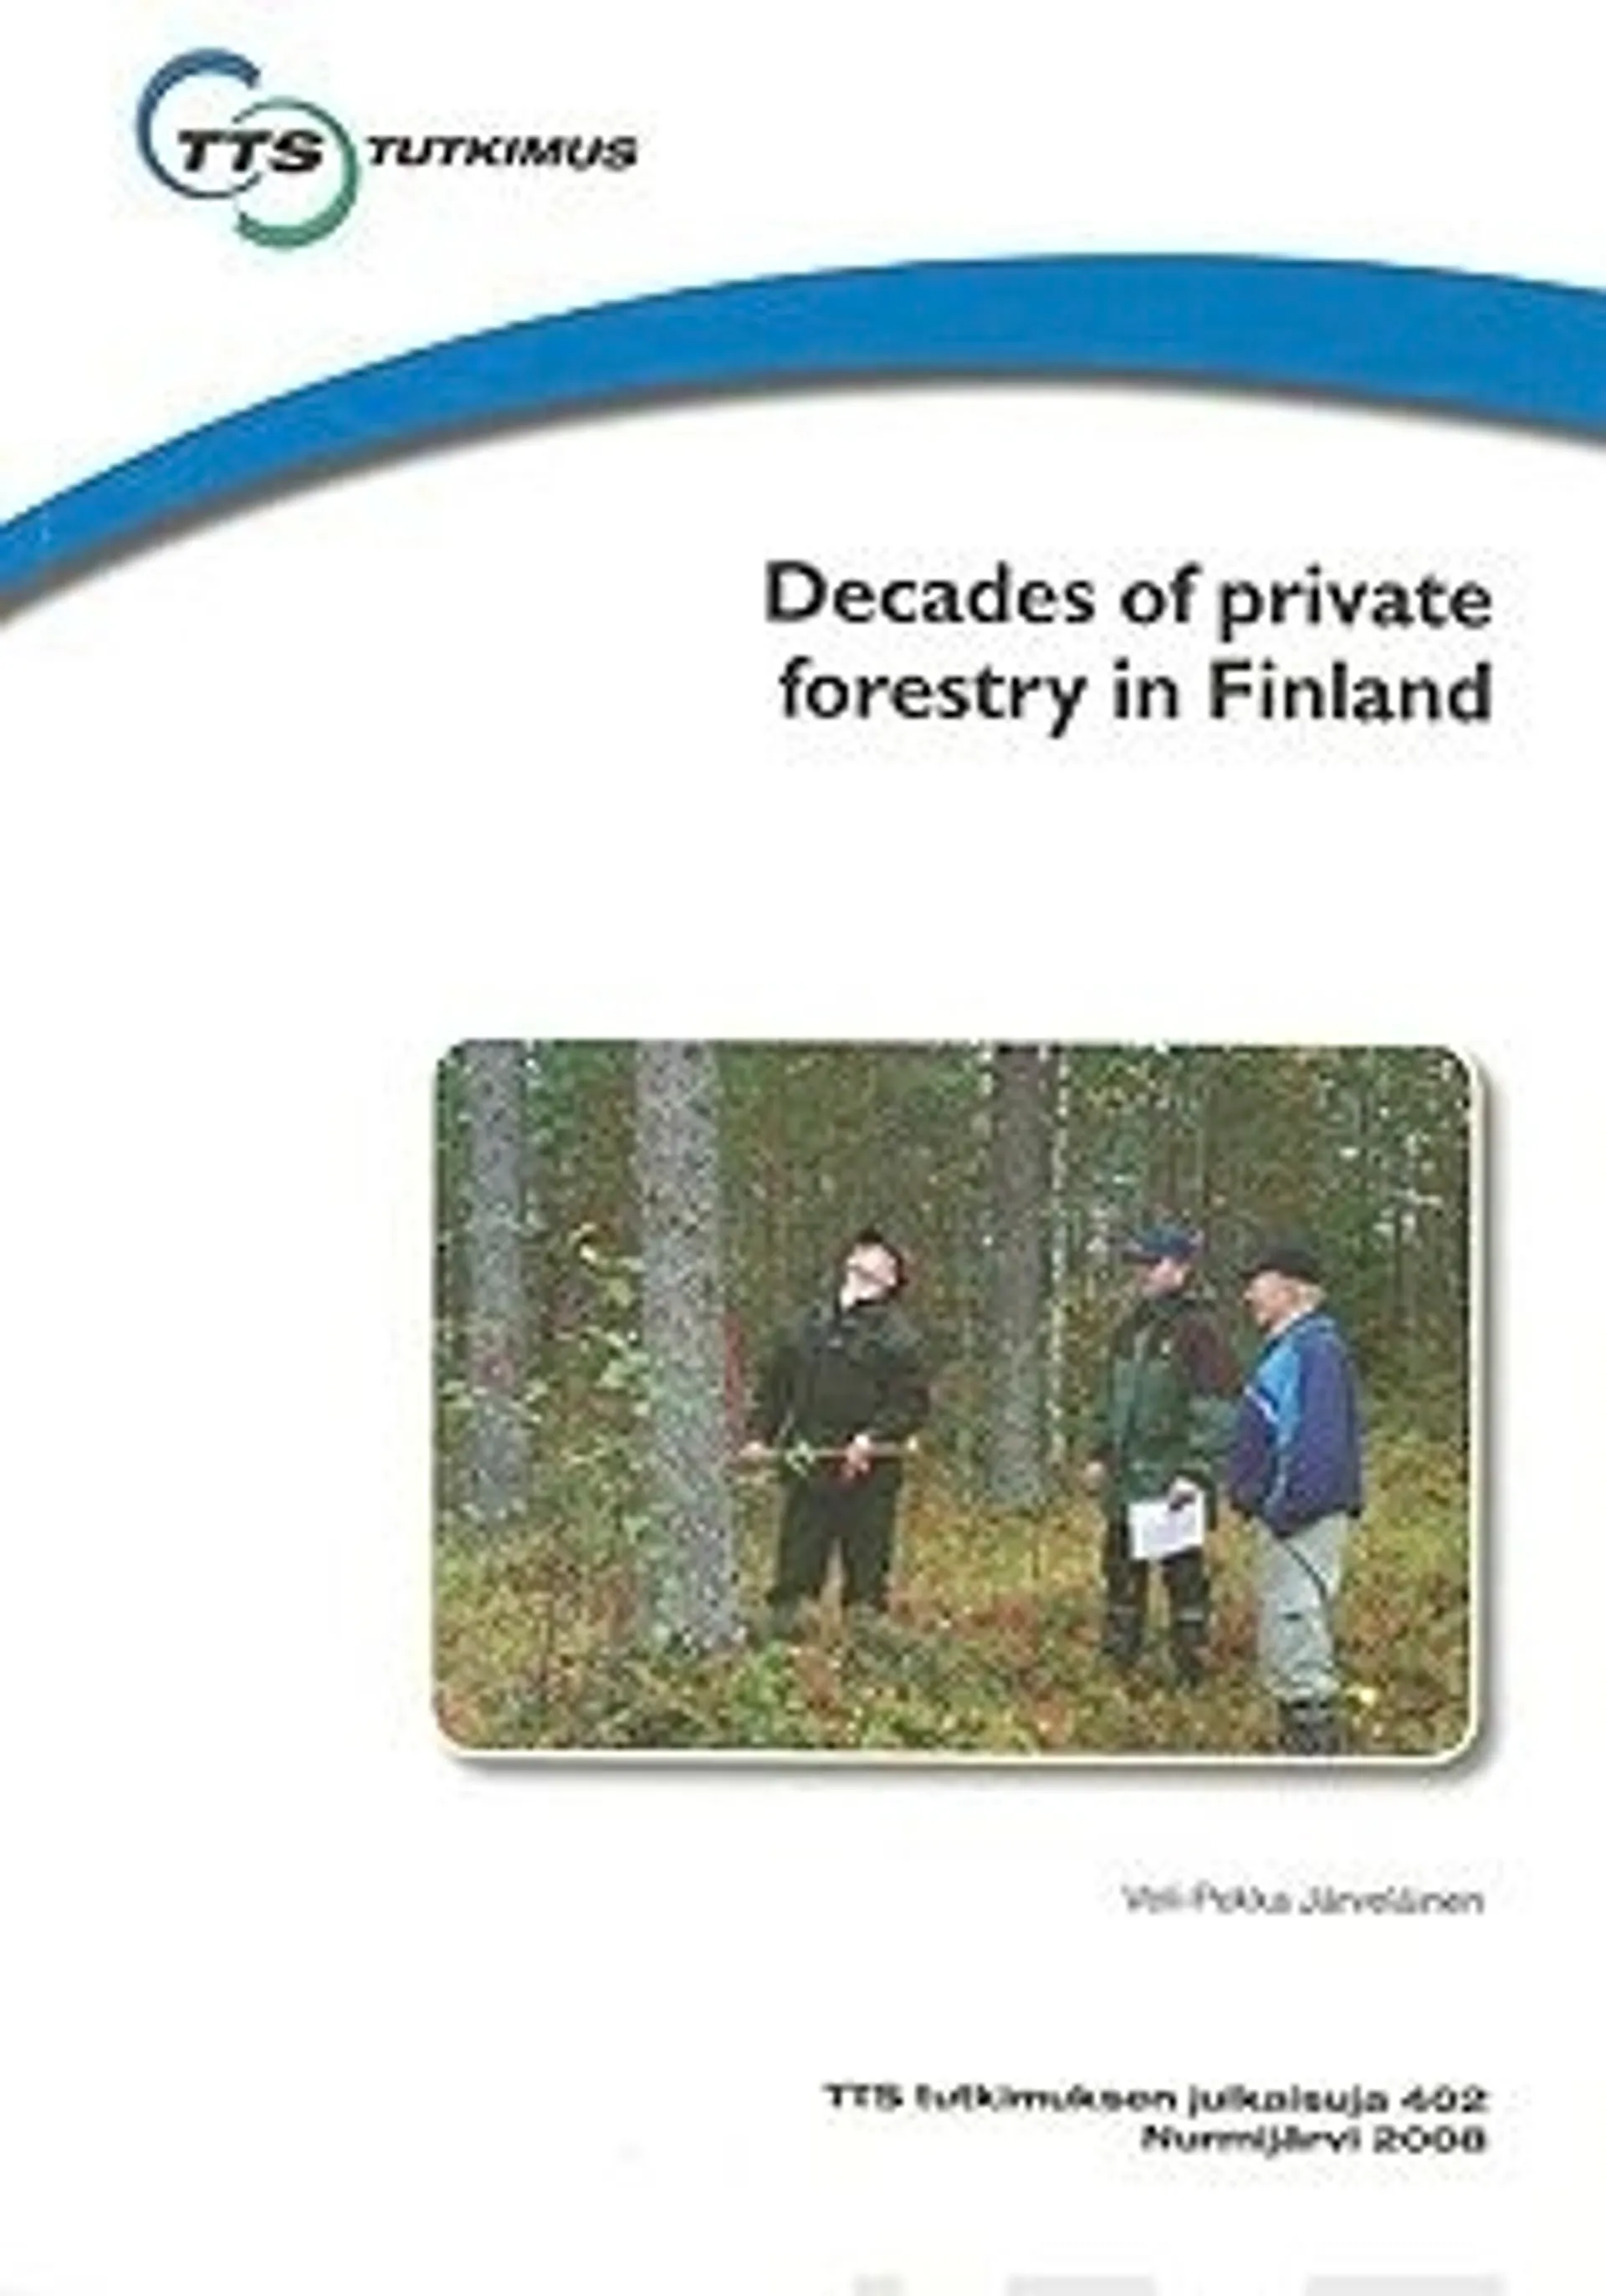 Järveläinen, Decades of private forestry in Finland